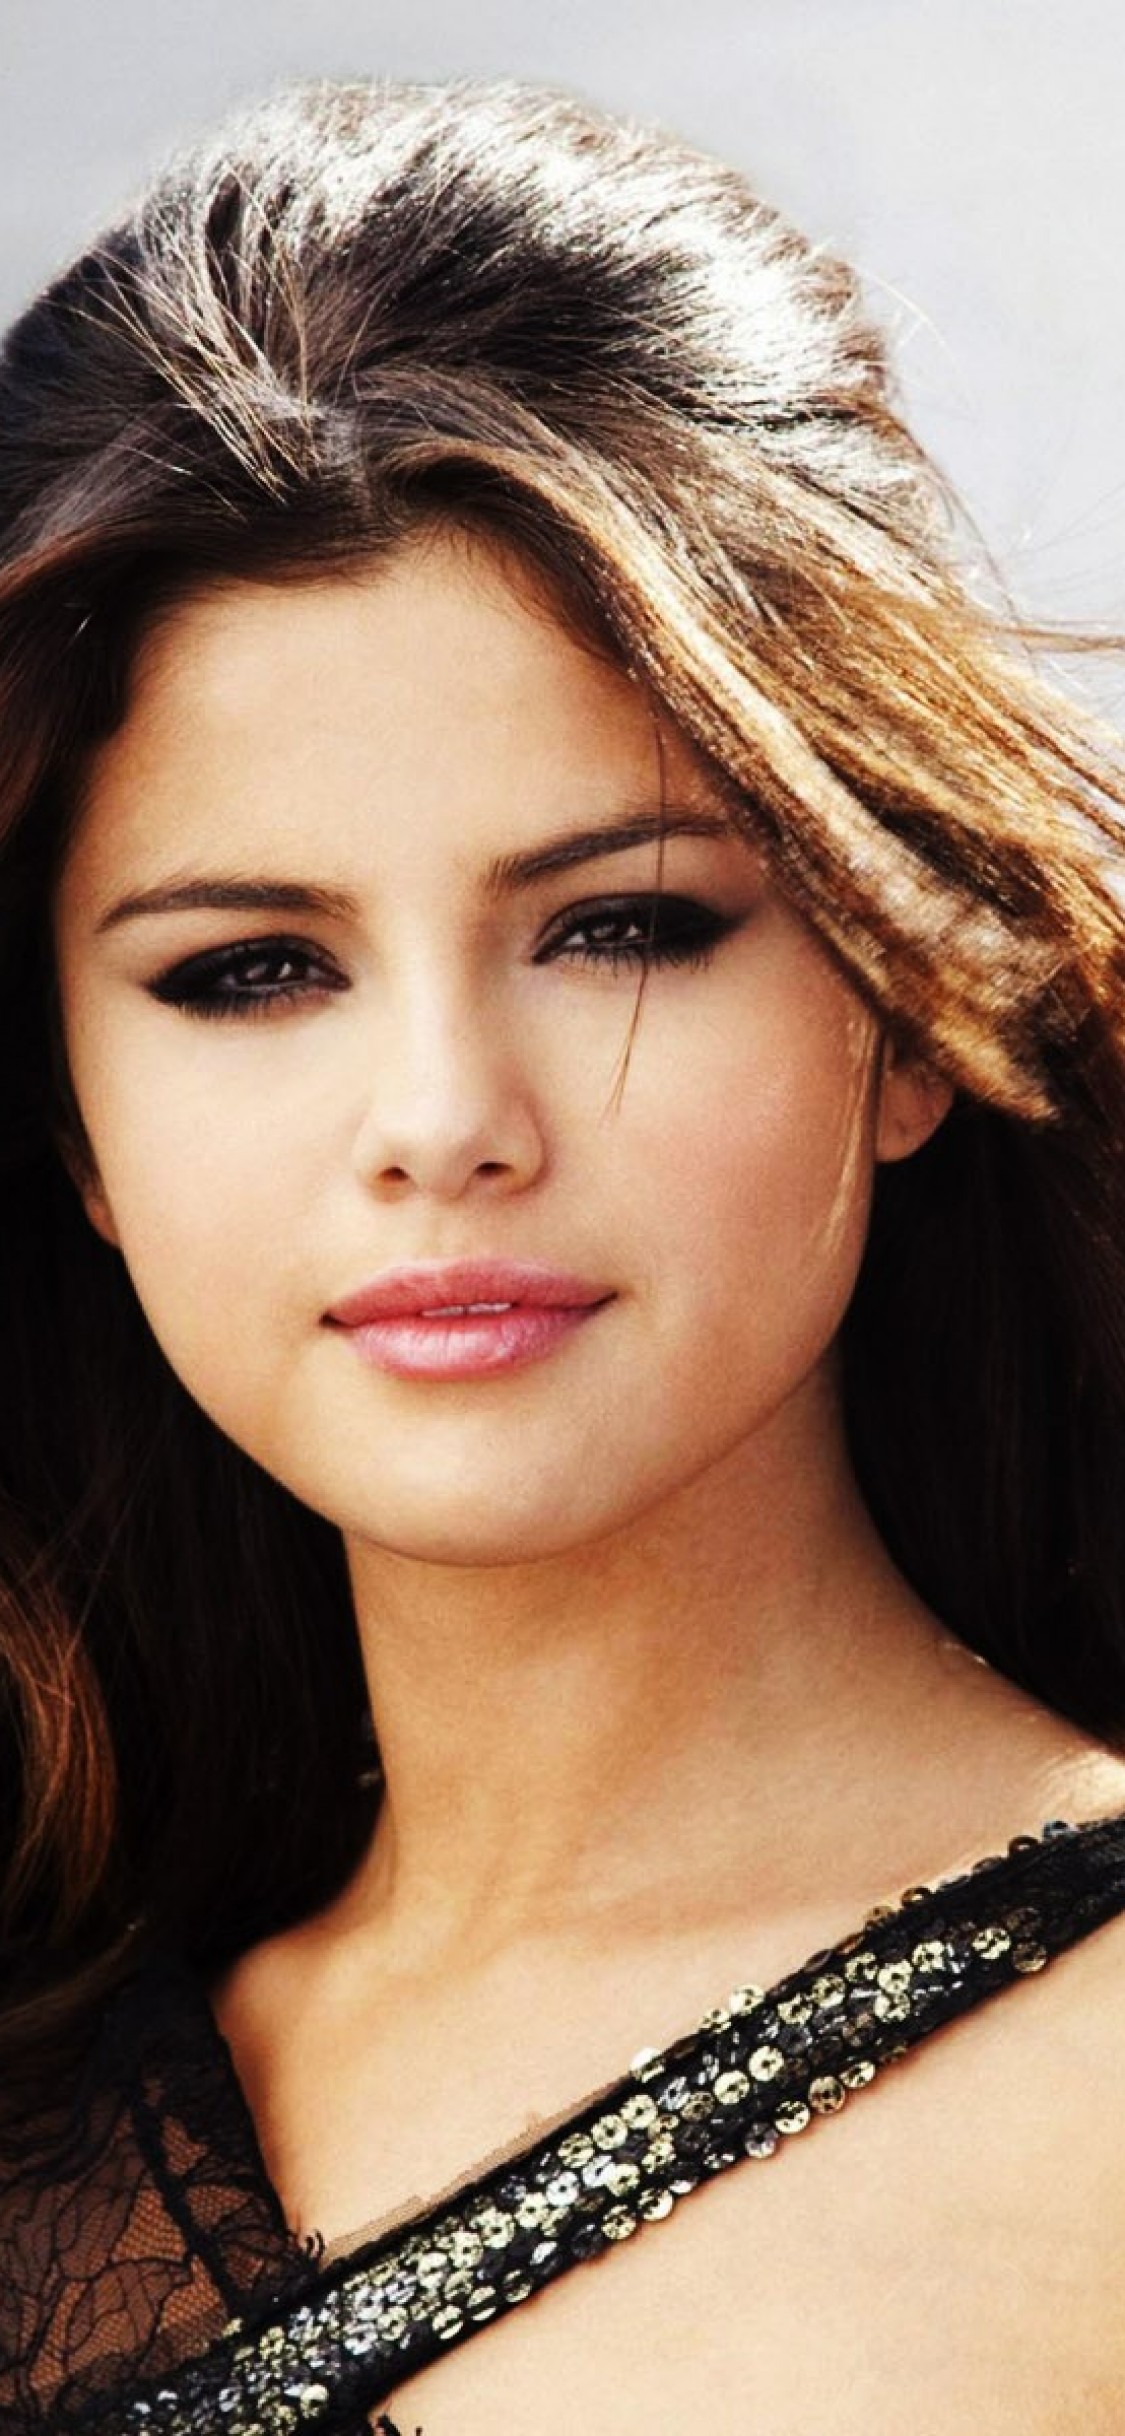 Iphone X Selena Gomez Wallpaper - Beauty Woman In Would , HD Wallpaper & Backgrounds